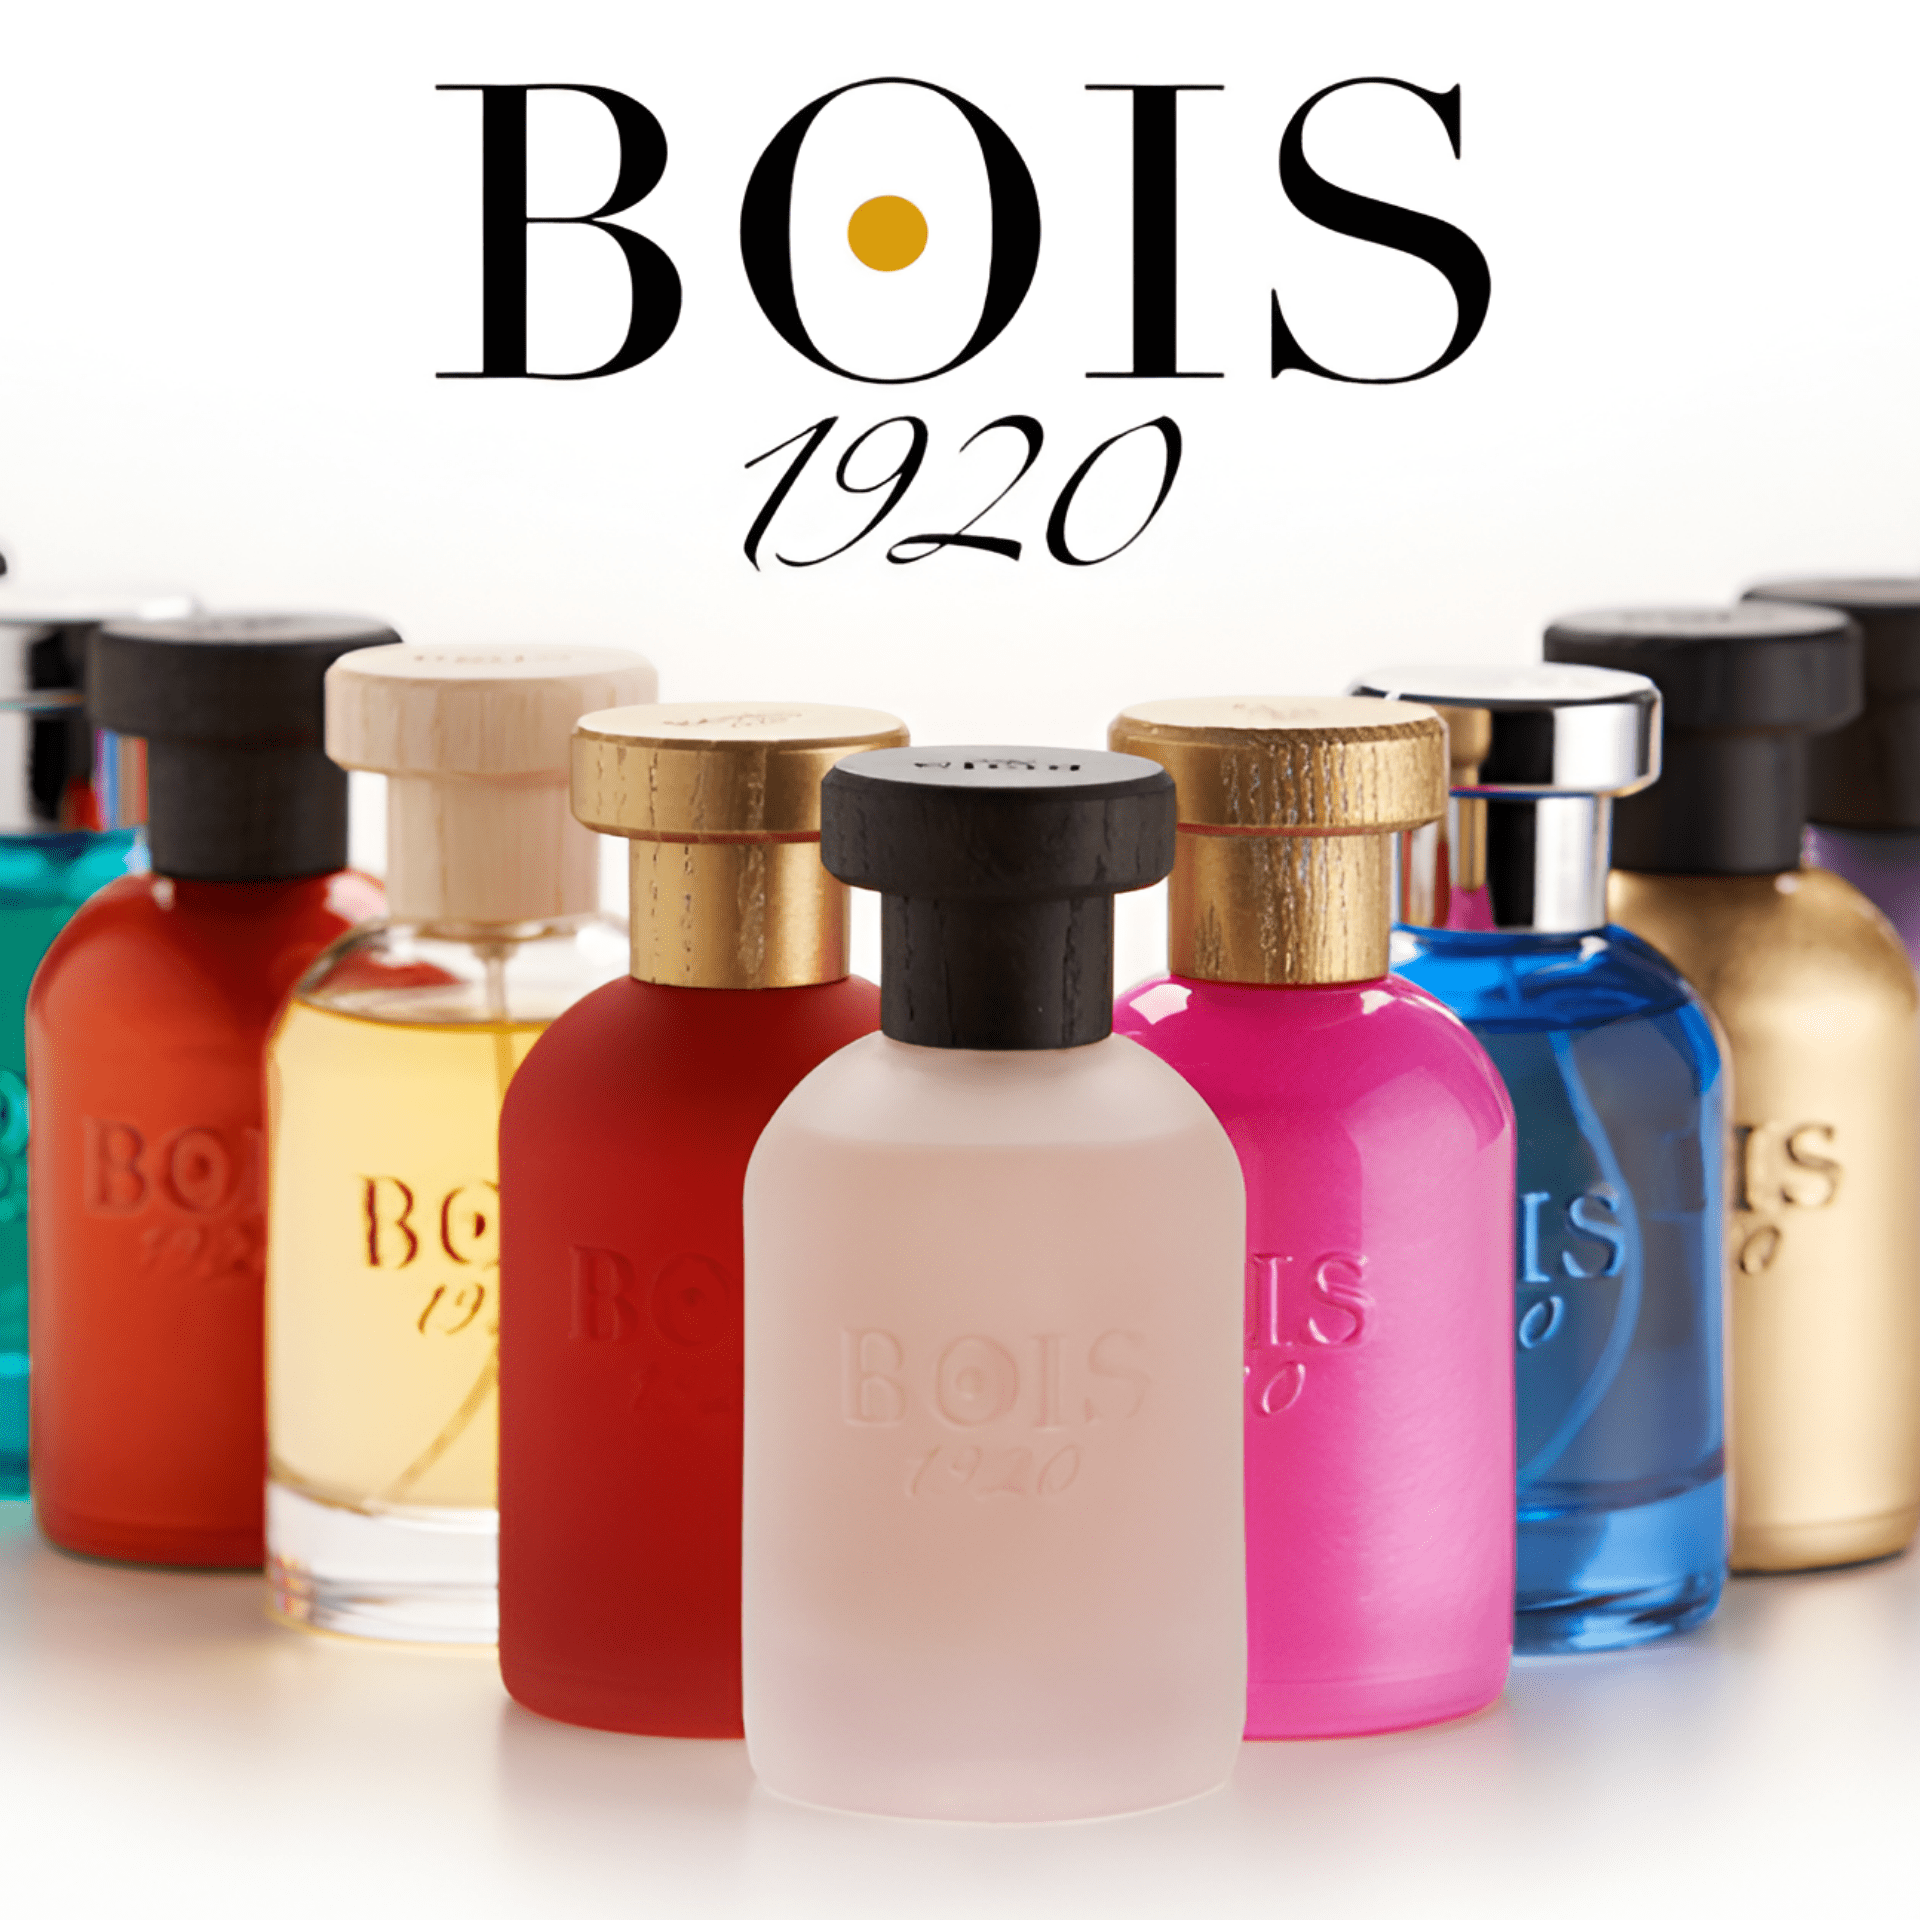 Bois 1920 Rosa 23 EDT | My Perfume Shop Australia